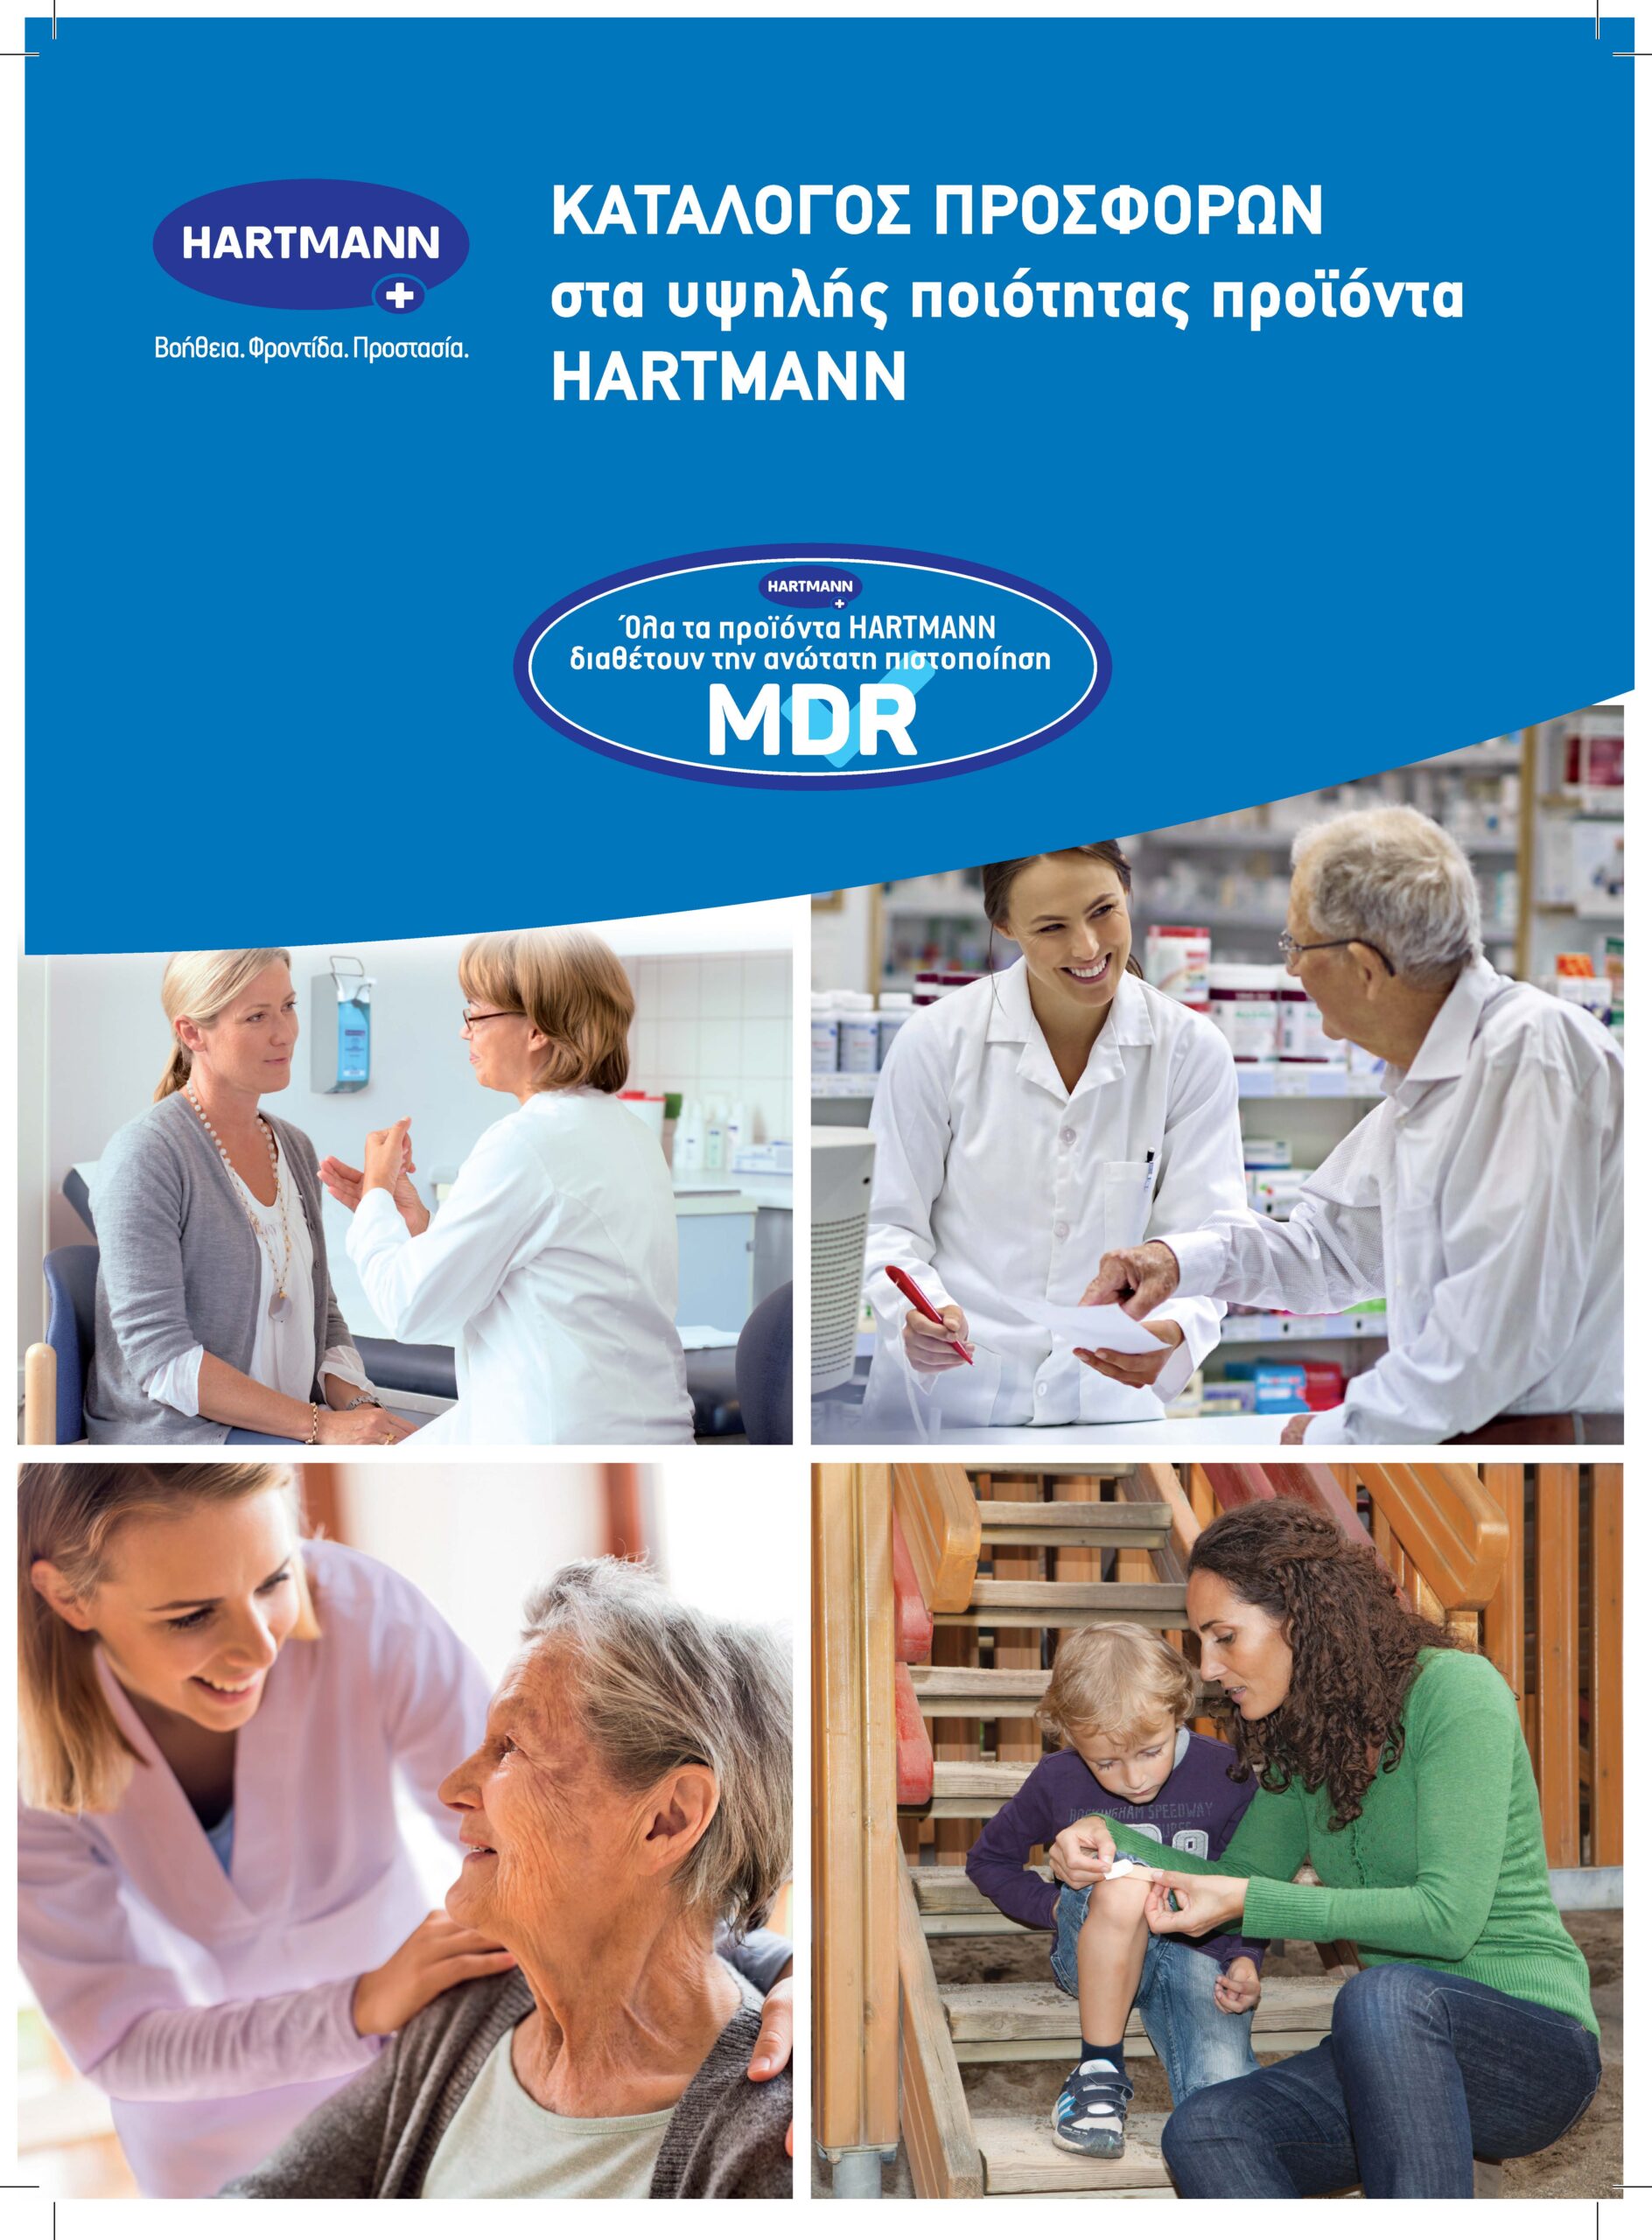 Hartmann product catalogue